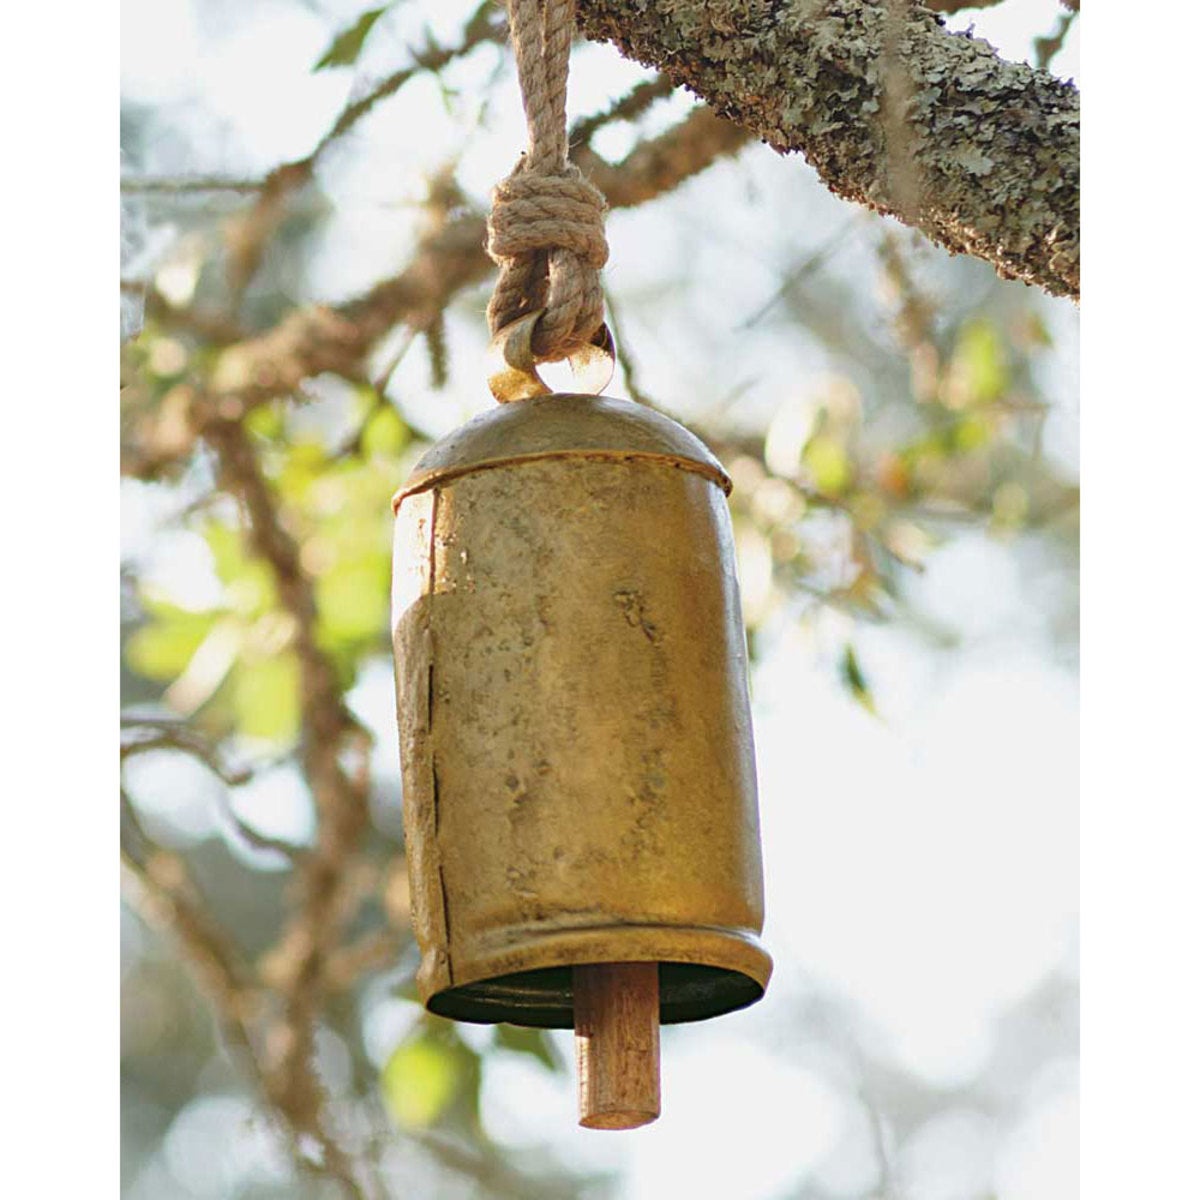 Antique Brass Bell, Large Brass Bell, Brass Temple Bell, Large